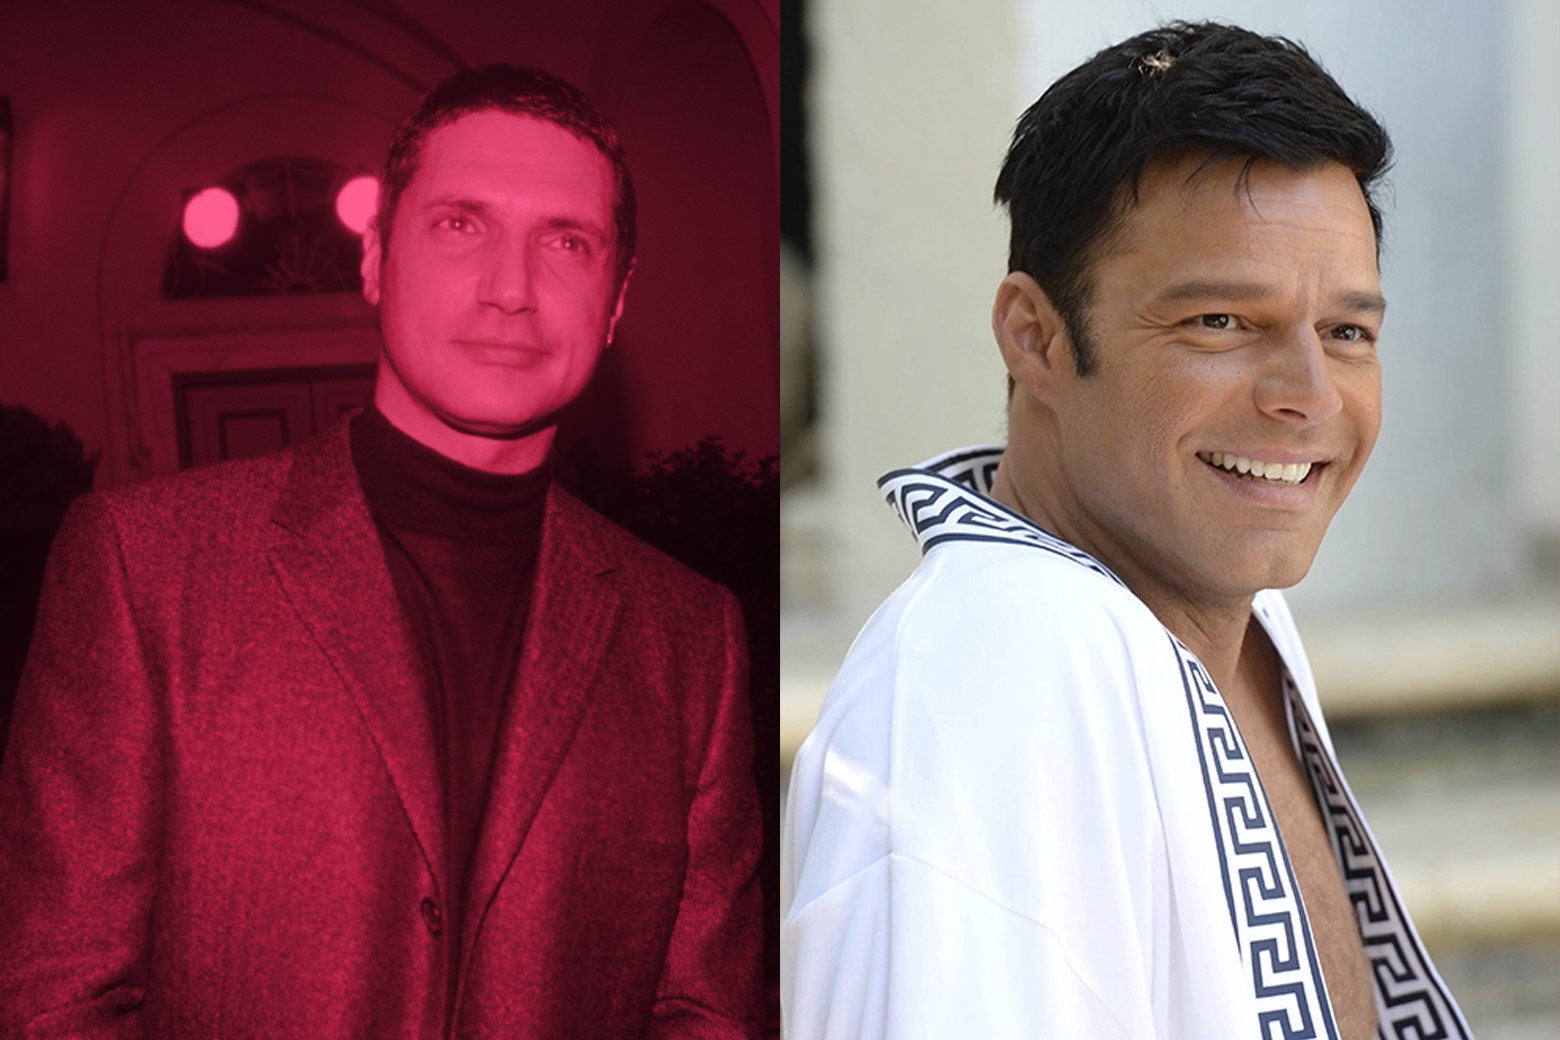 Antonio D'Amico and Ricky Martin as D'Amico.